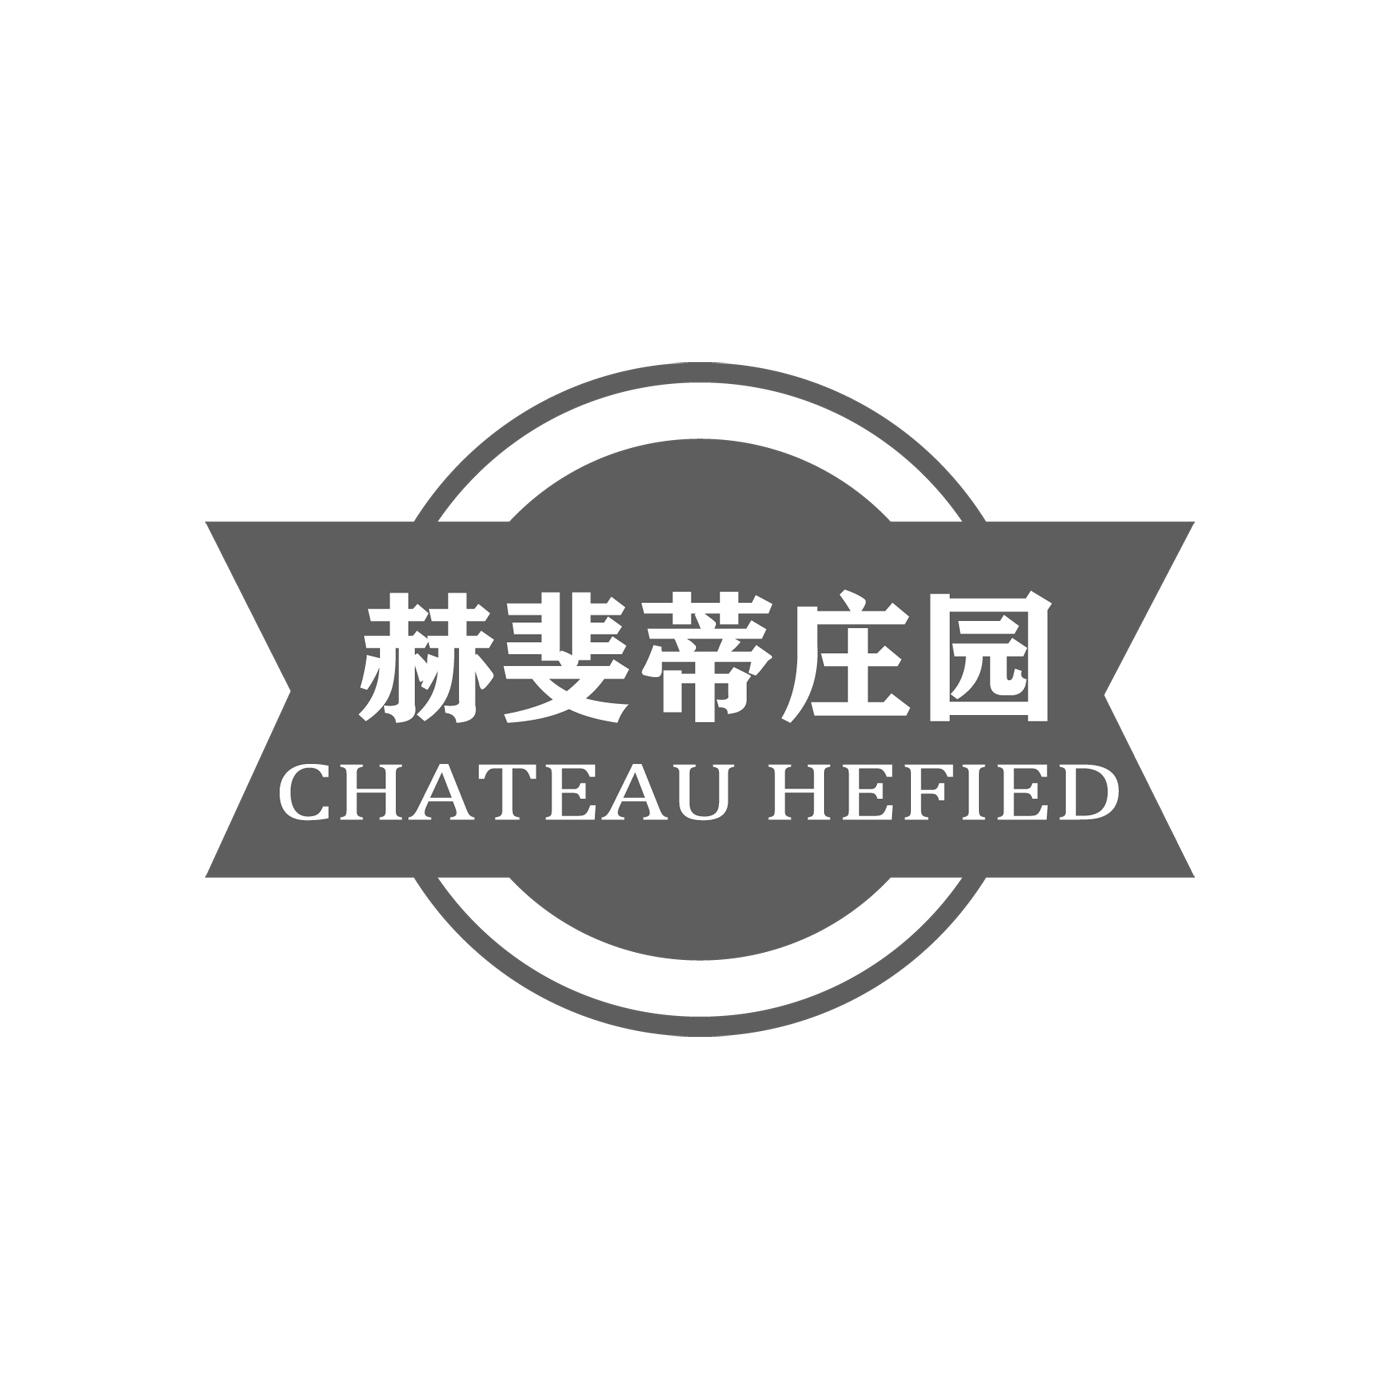 赫斐蒂庄园 CHATEAU HEFIED商标转让